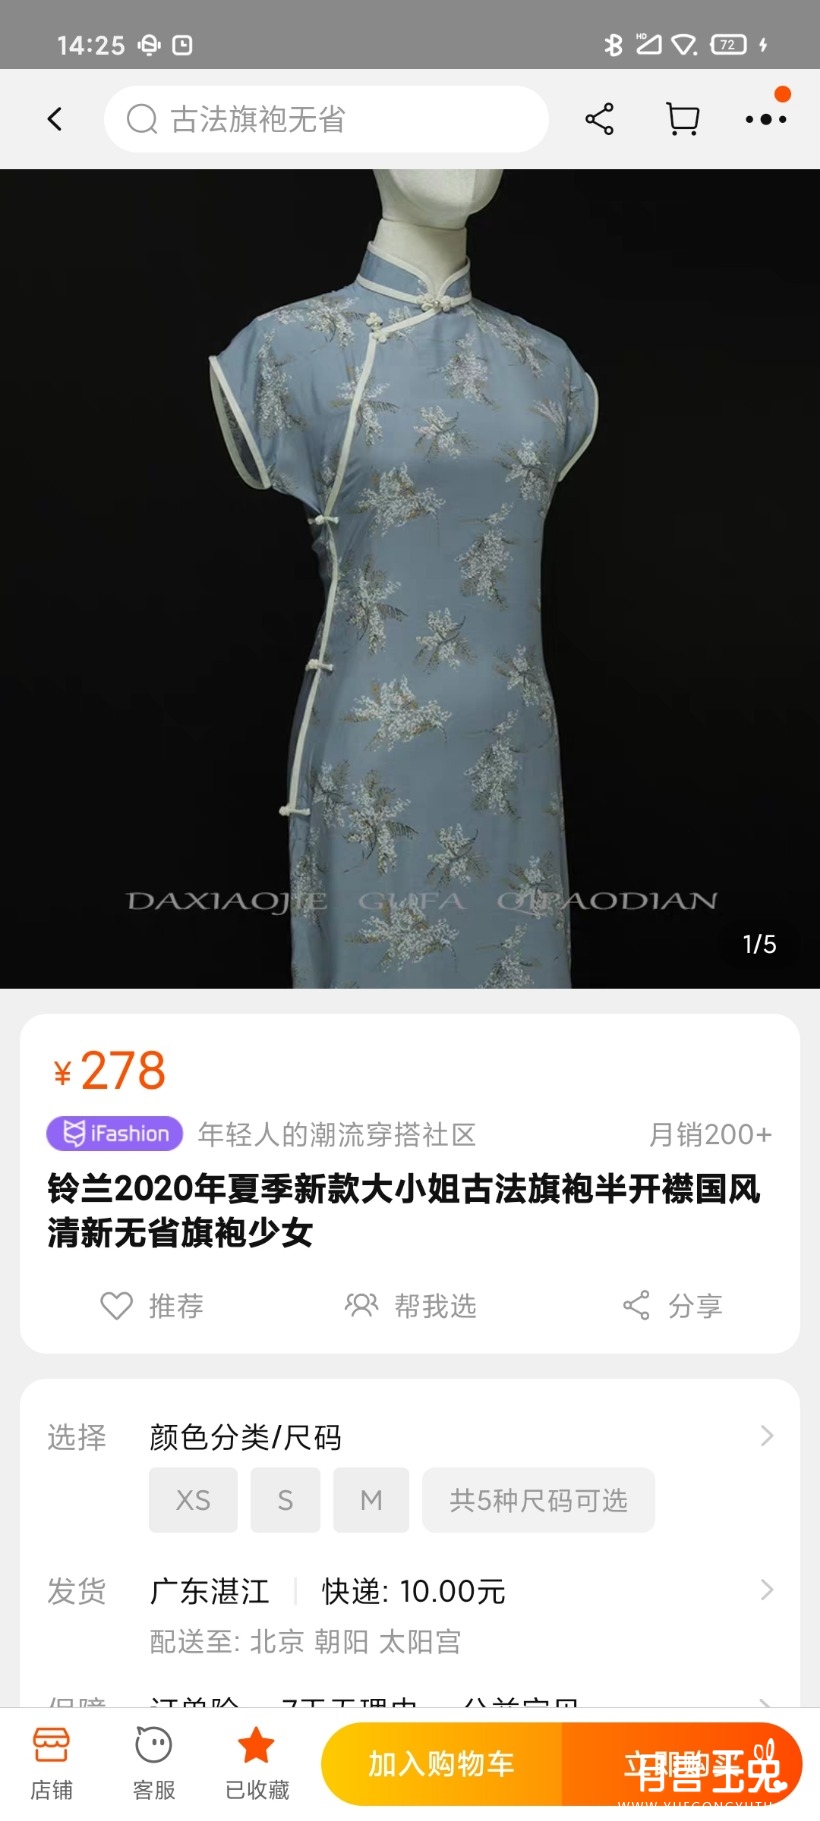 Screenshot_2021-03-31-14-25-57-182_com.taobao.taobao.jpg